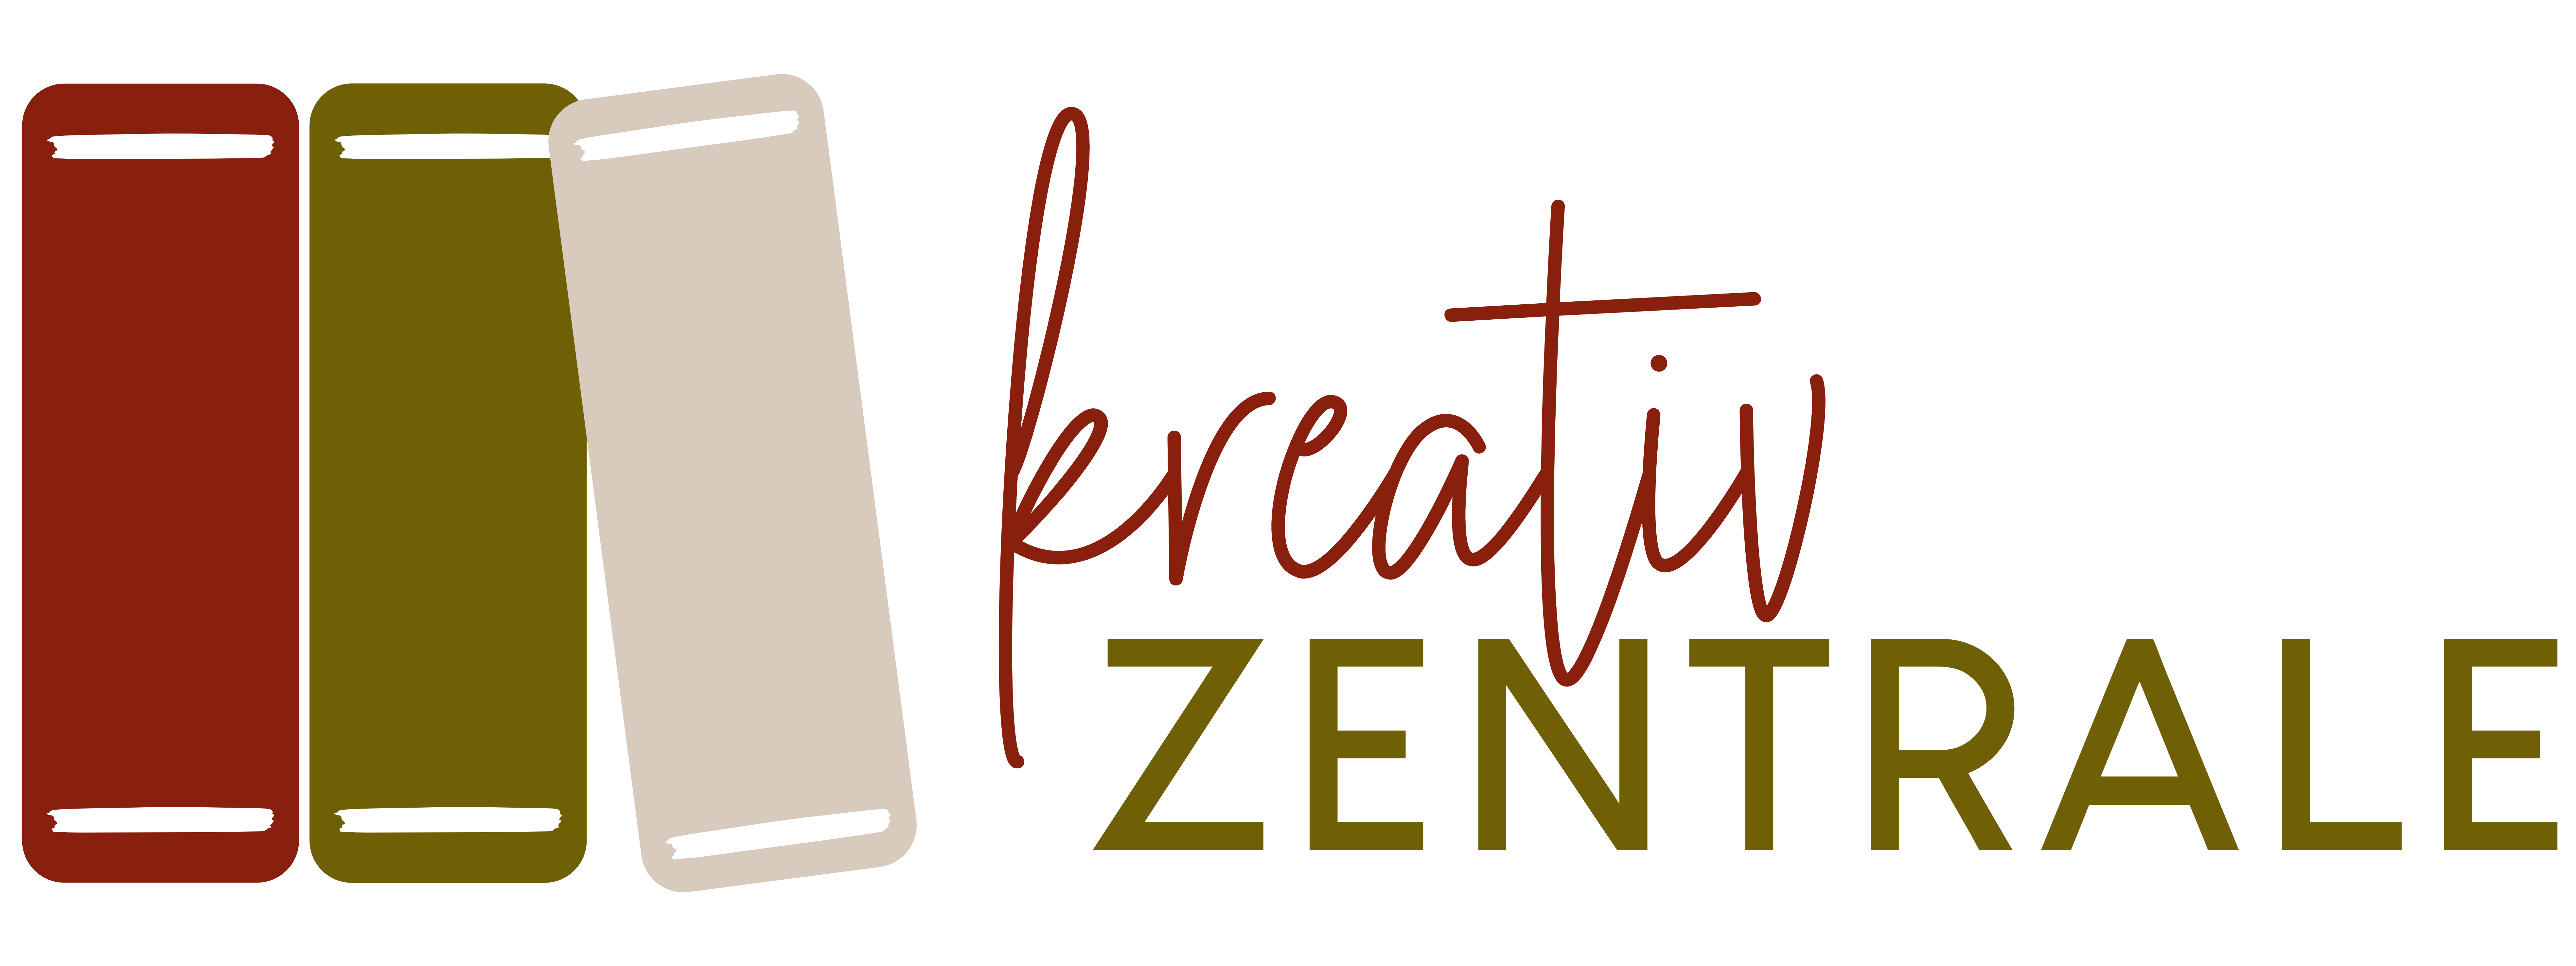 Logo Kreativzentrale_transparent